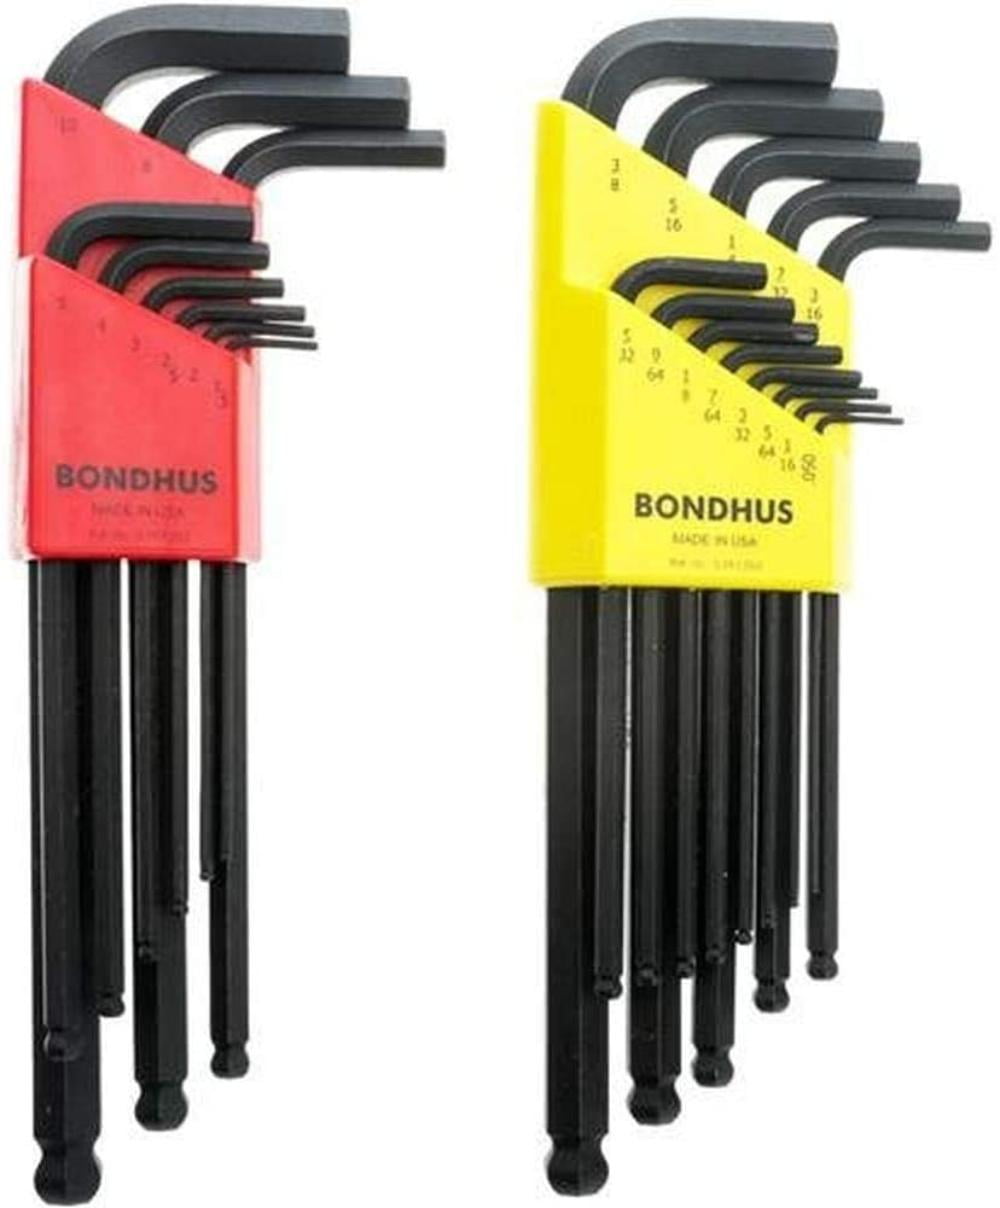 Bondhus Classic Steel Hex Fold Up Wrench Set Torx Metric SAE Standard USA Metal